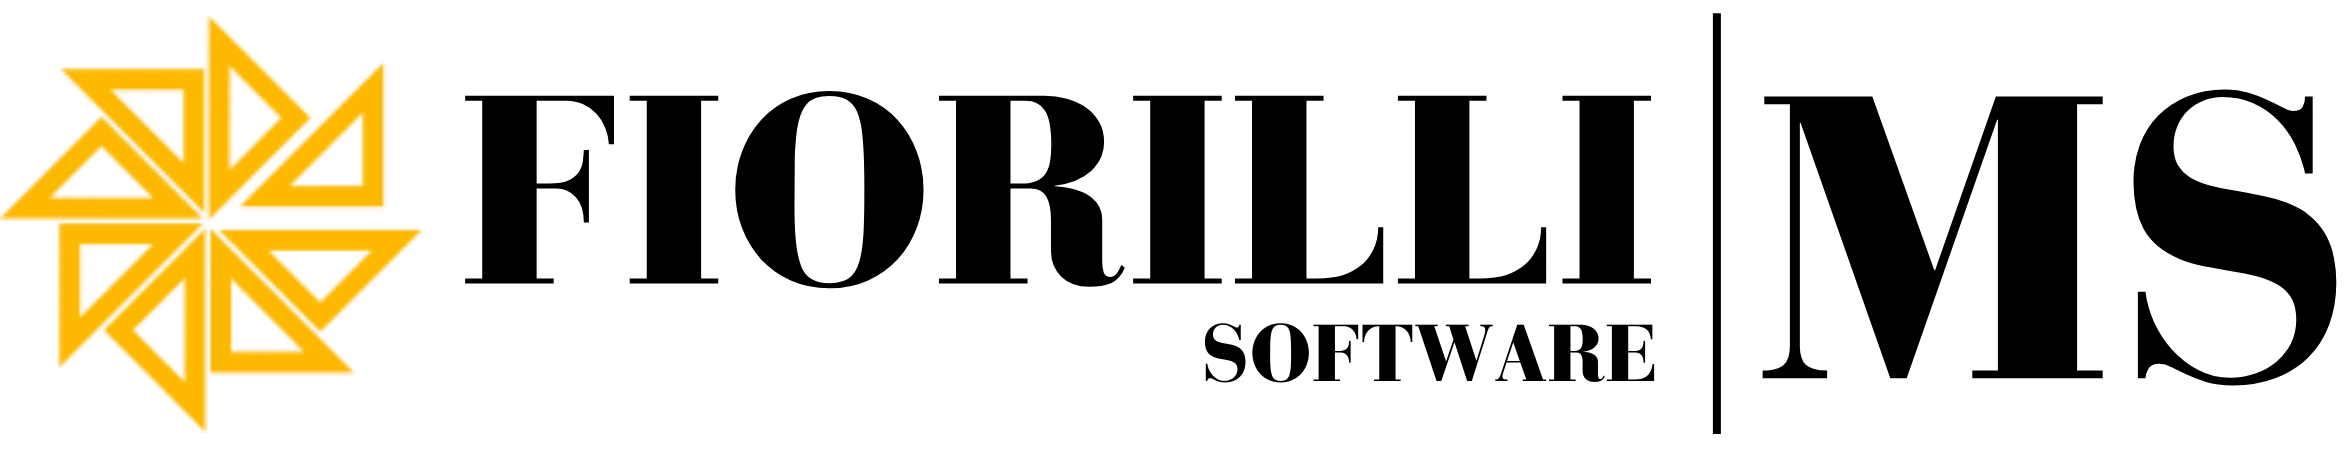 Devmedia logo